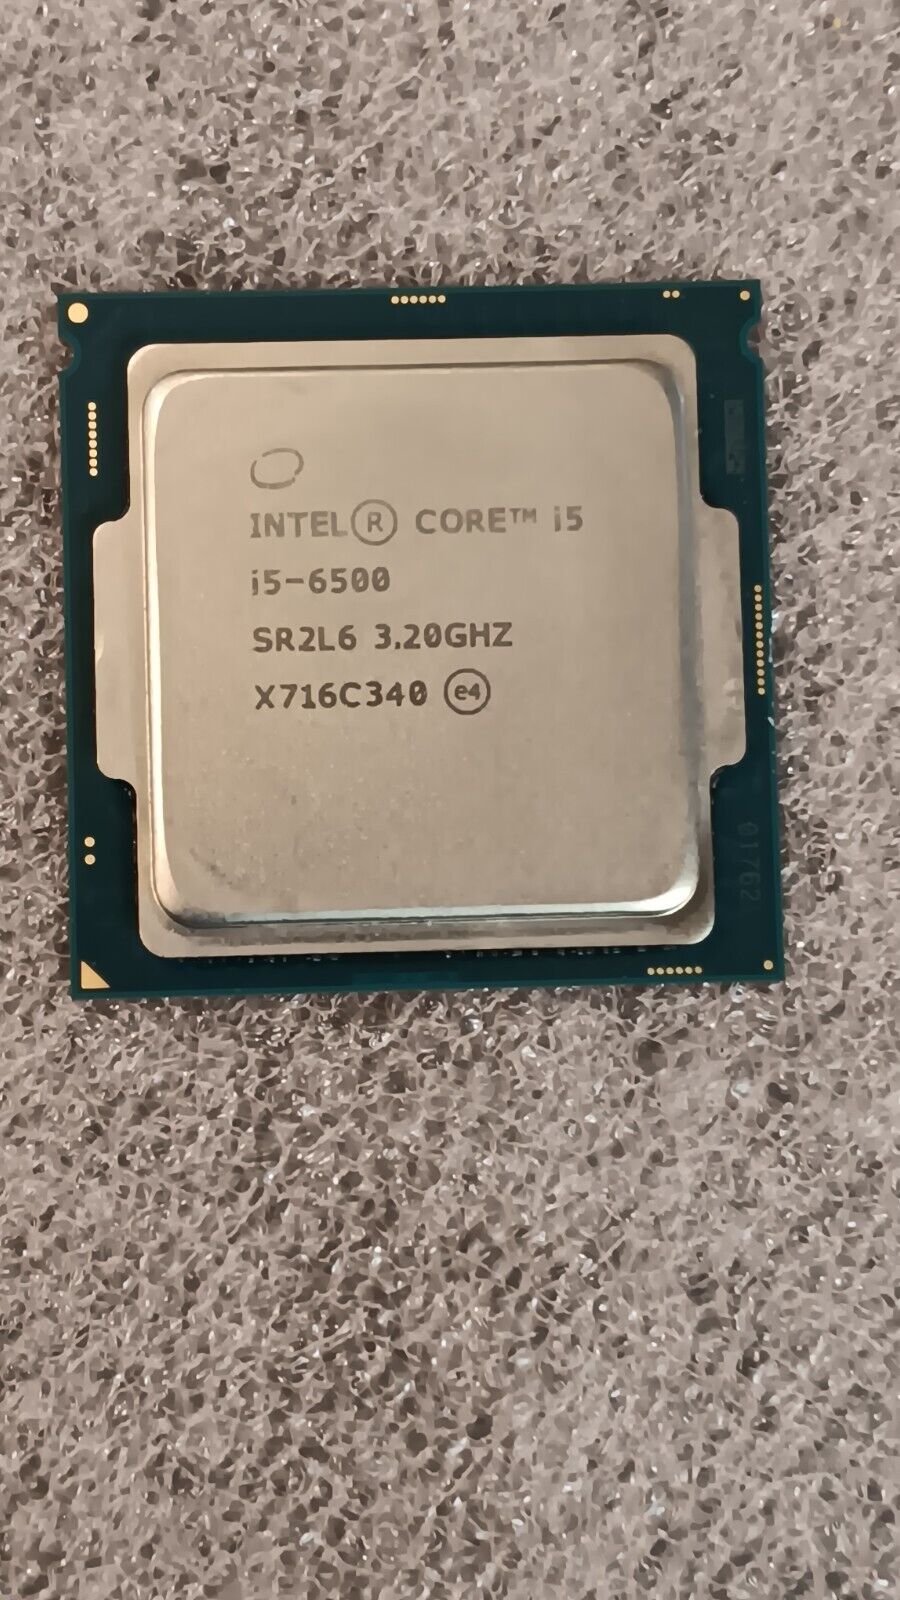 Intel Core i5-6500 SR2L6 3.20GHz Desktop CPU